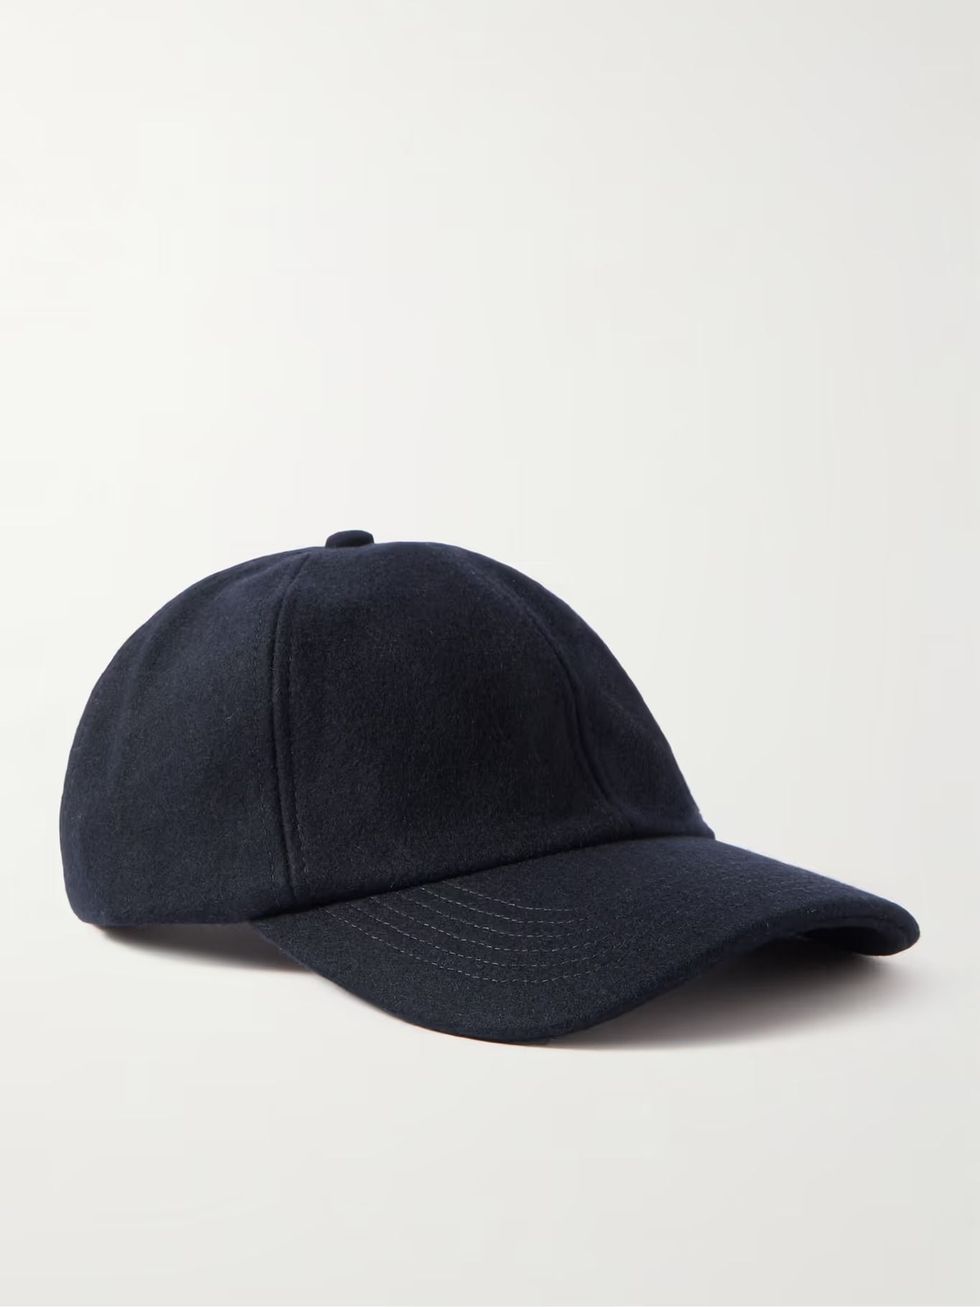 Trendy Denim Caps: Stylish Summer Baseball Caps for Men and Women - Black  and Blue Street Hats